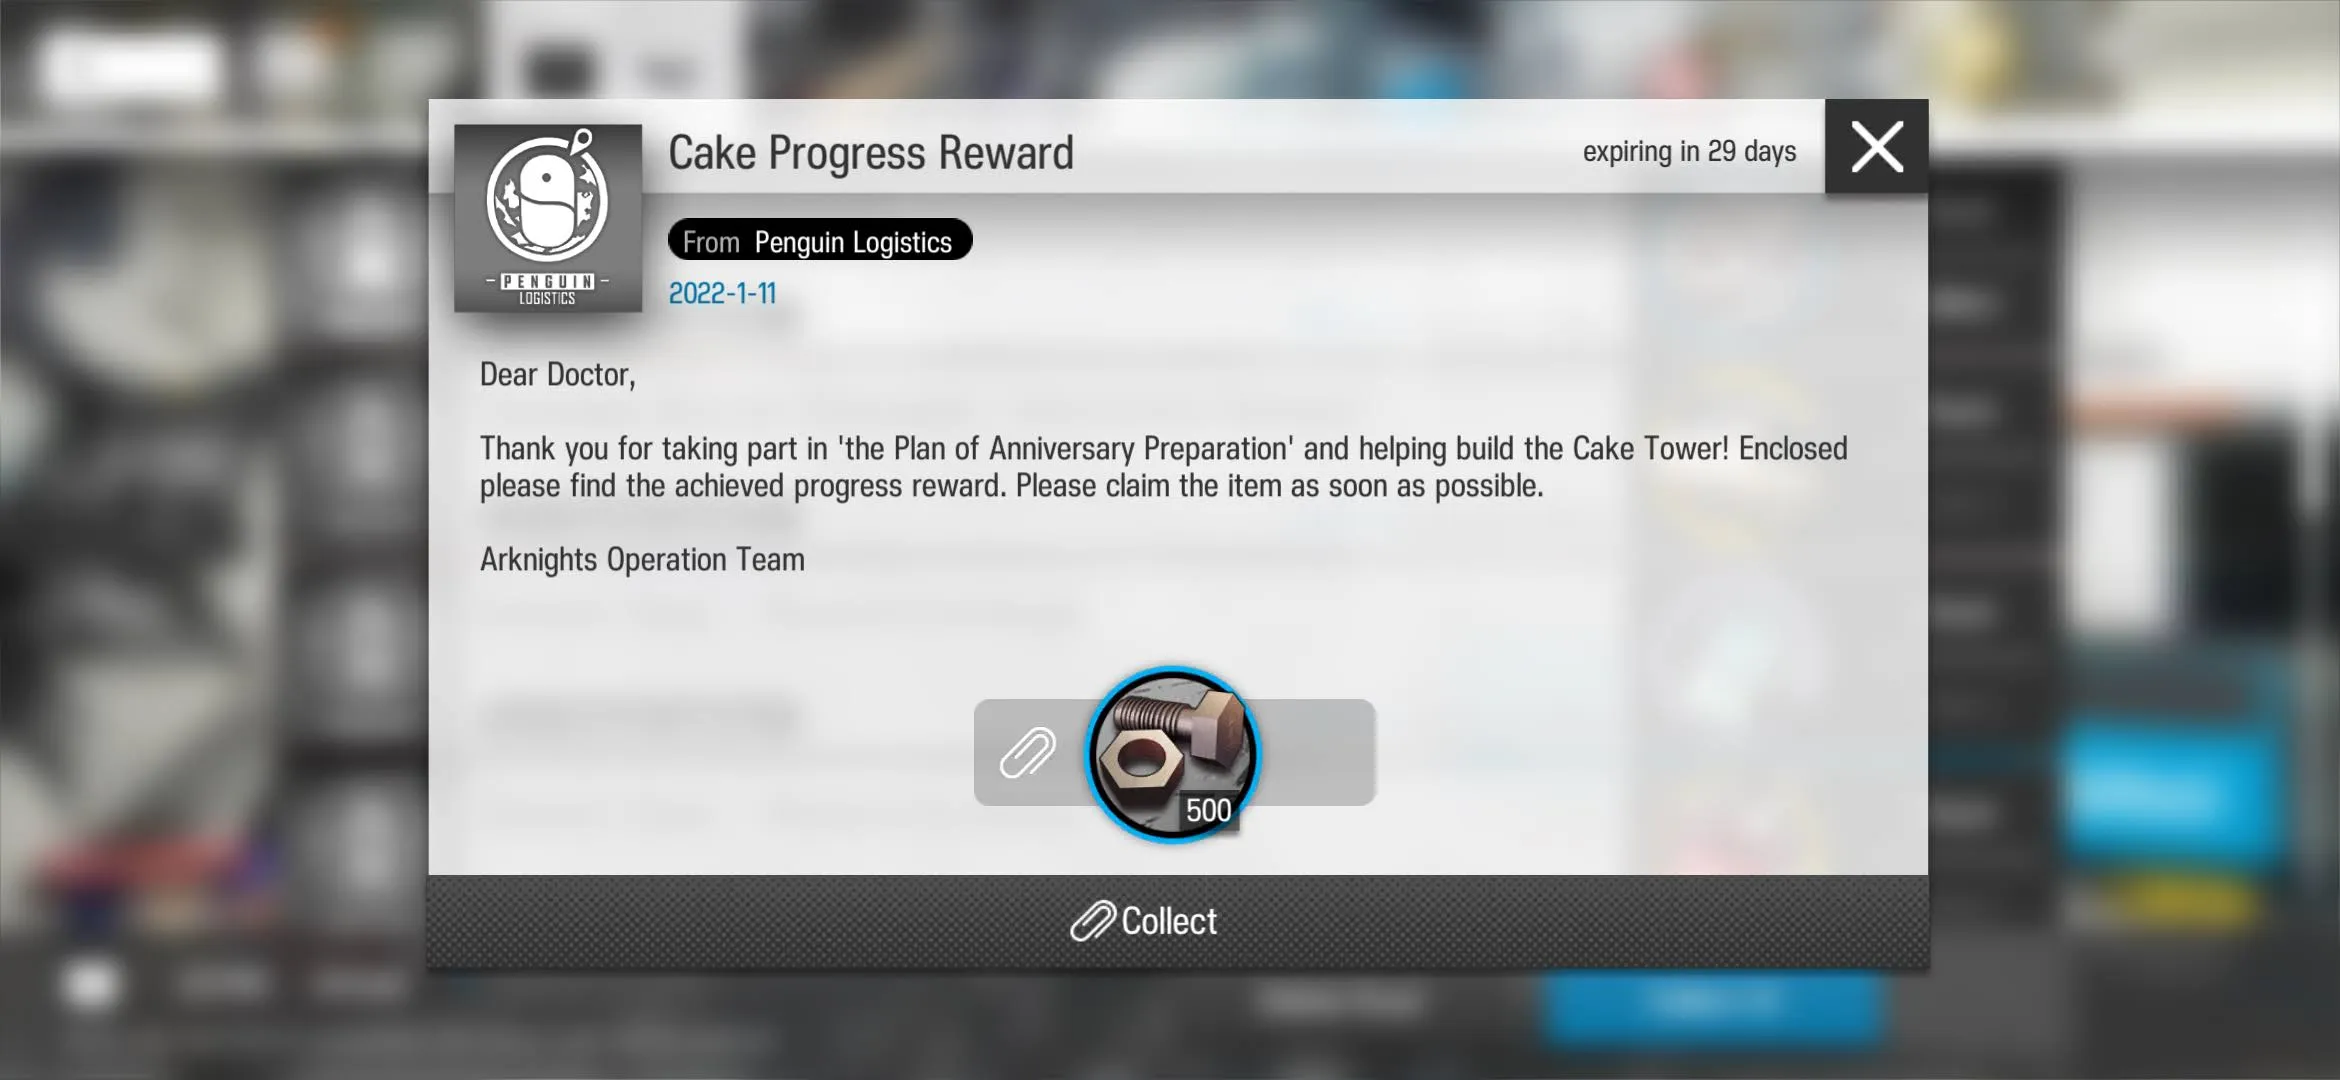 Cake Progress Reward